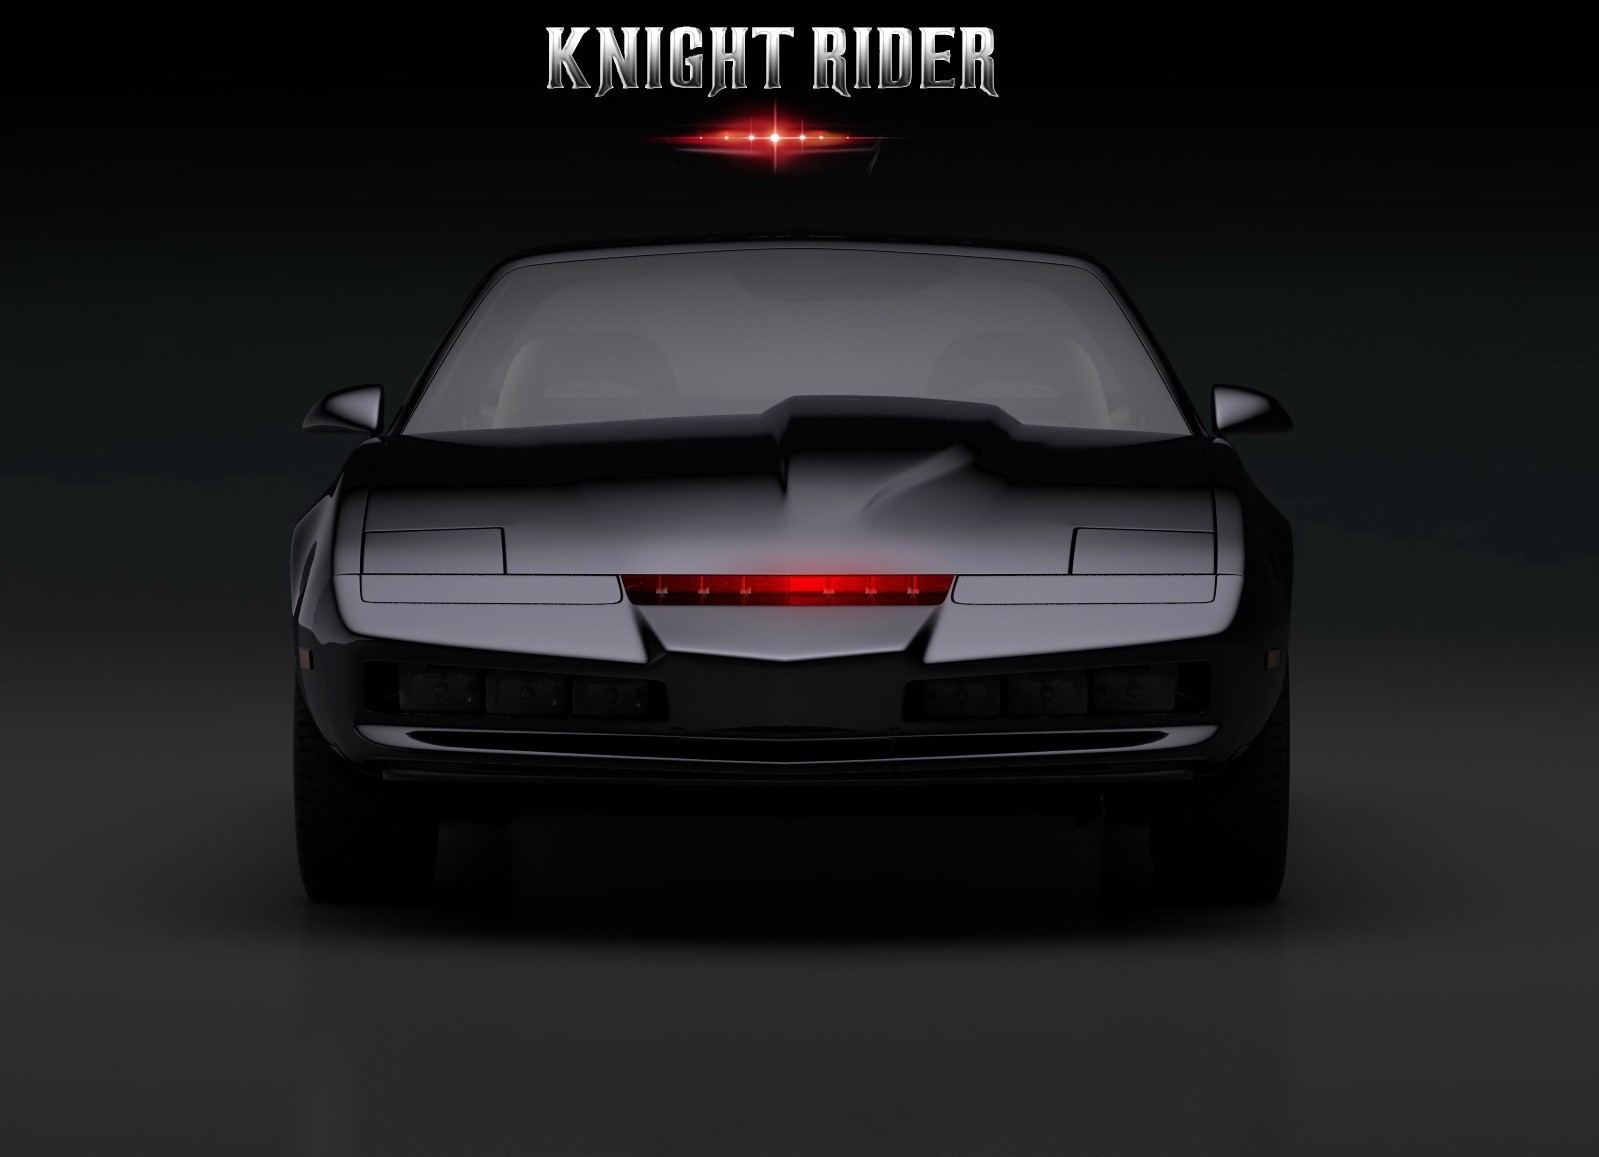 Knight Rider 3 Pc Game